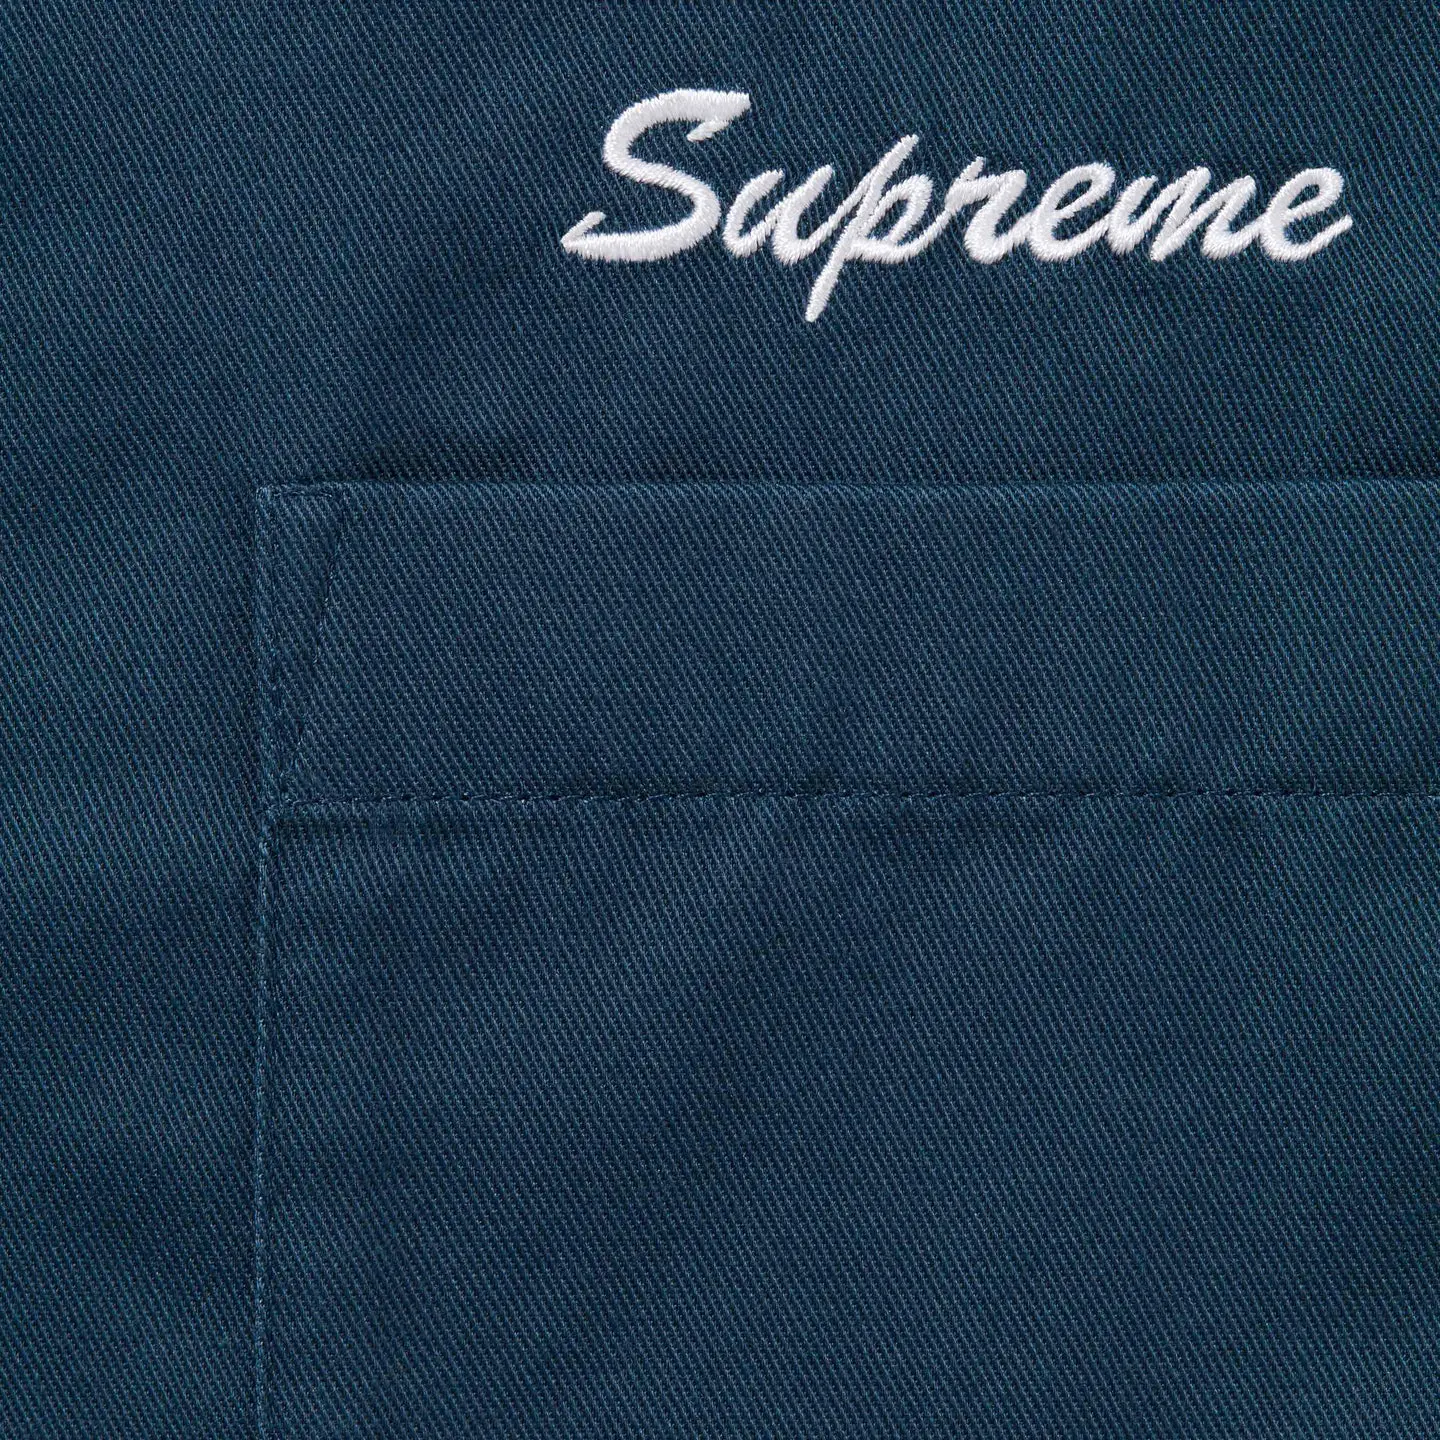 Supreme Margaret Keane Teardrop S/S Work Shirt